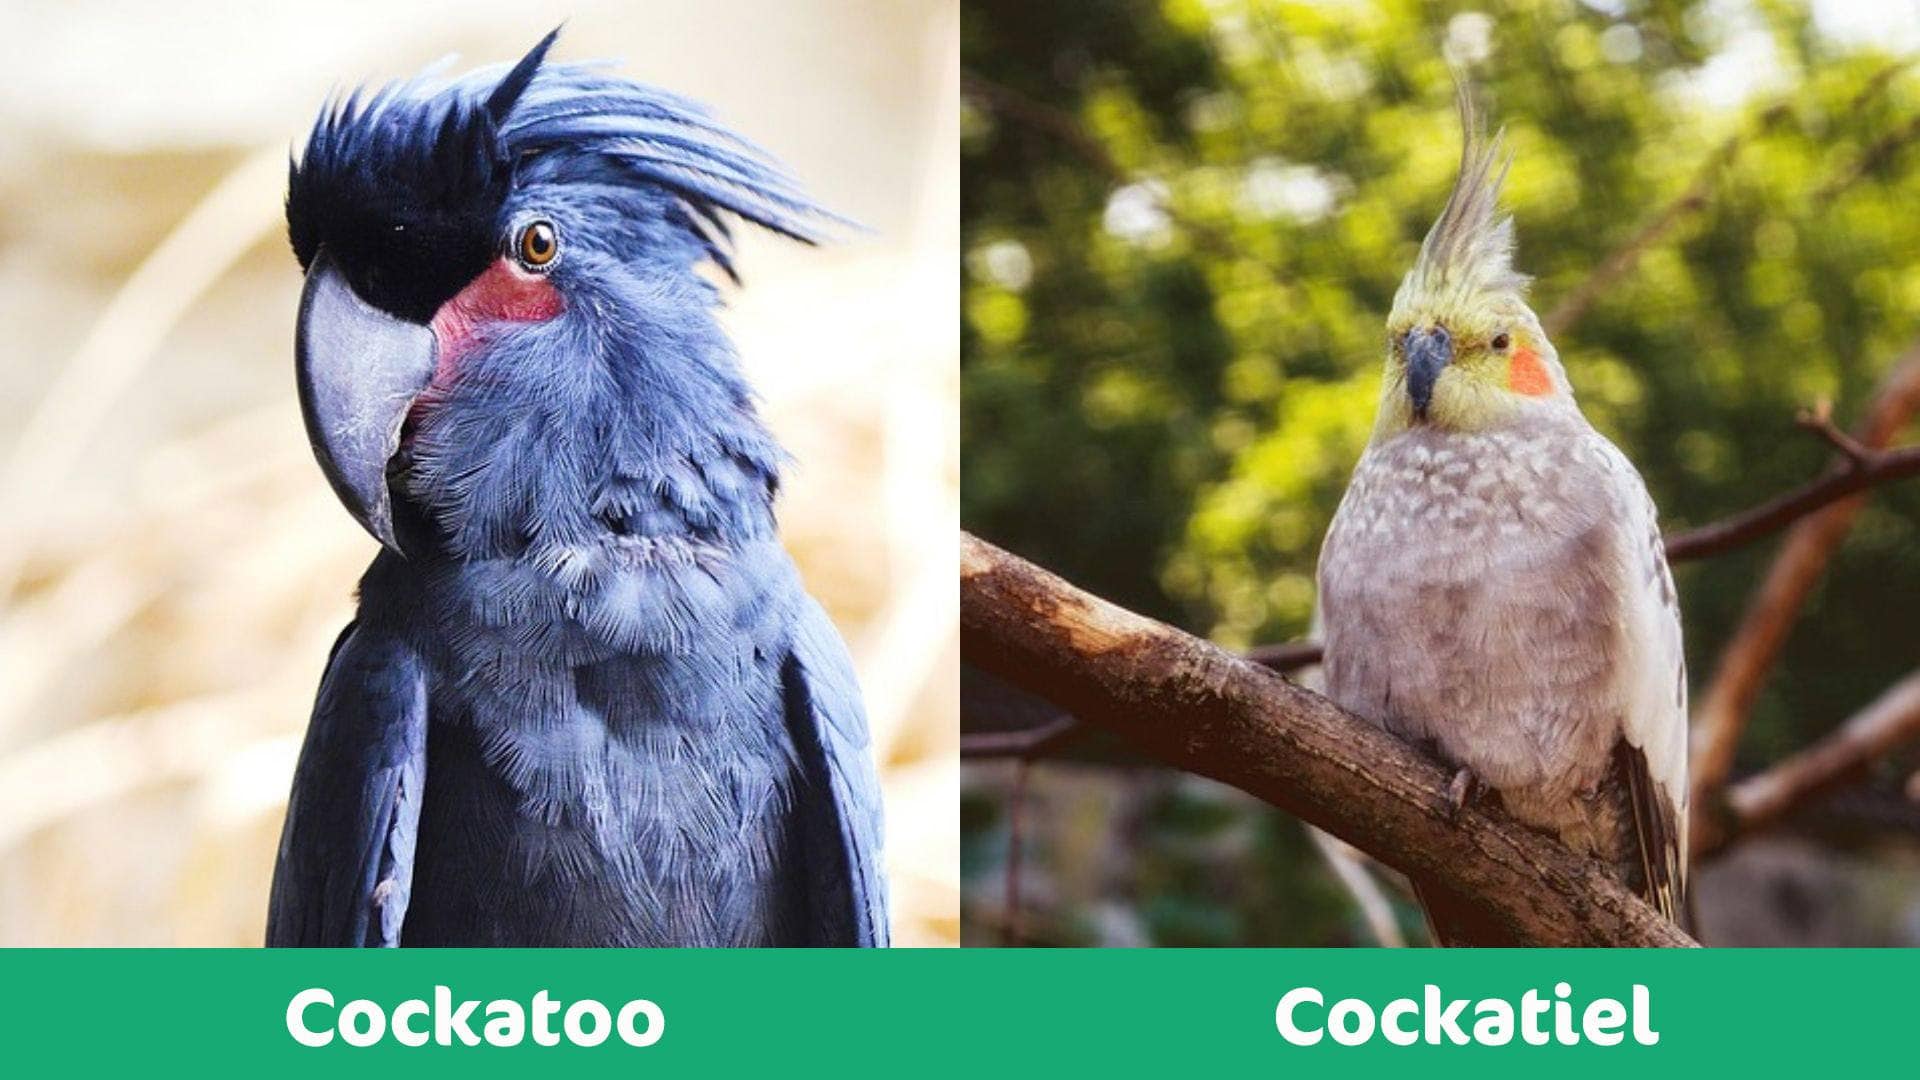 cockatiel vs cockatoo